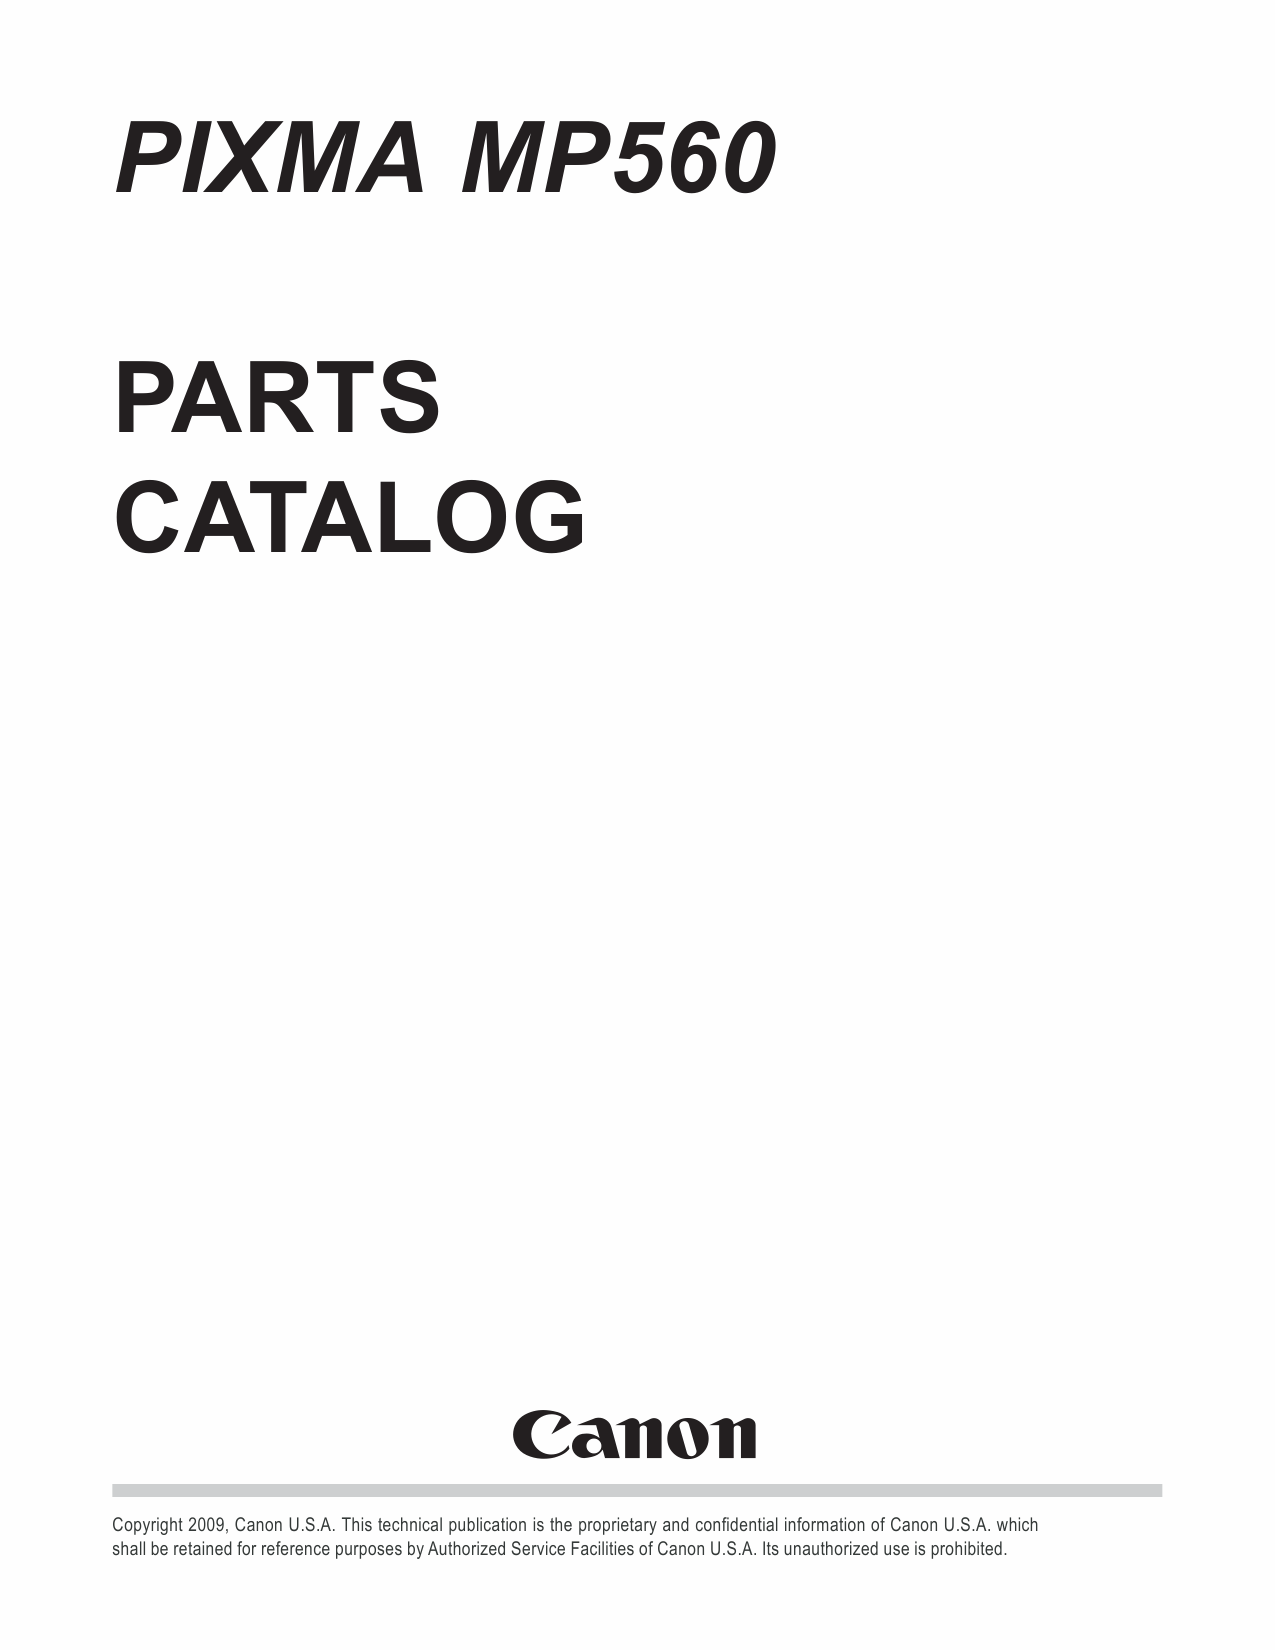 Canon PIXMA MP560 Parts Catalog Manual-1